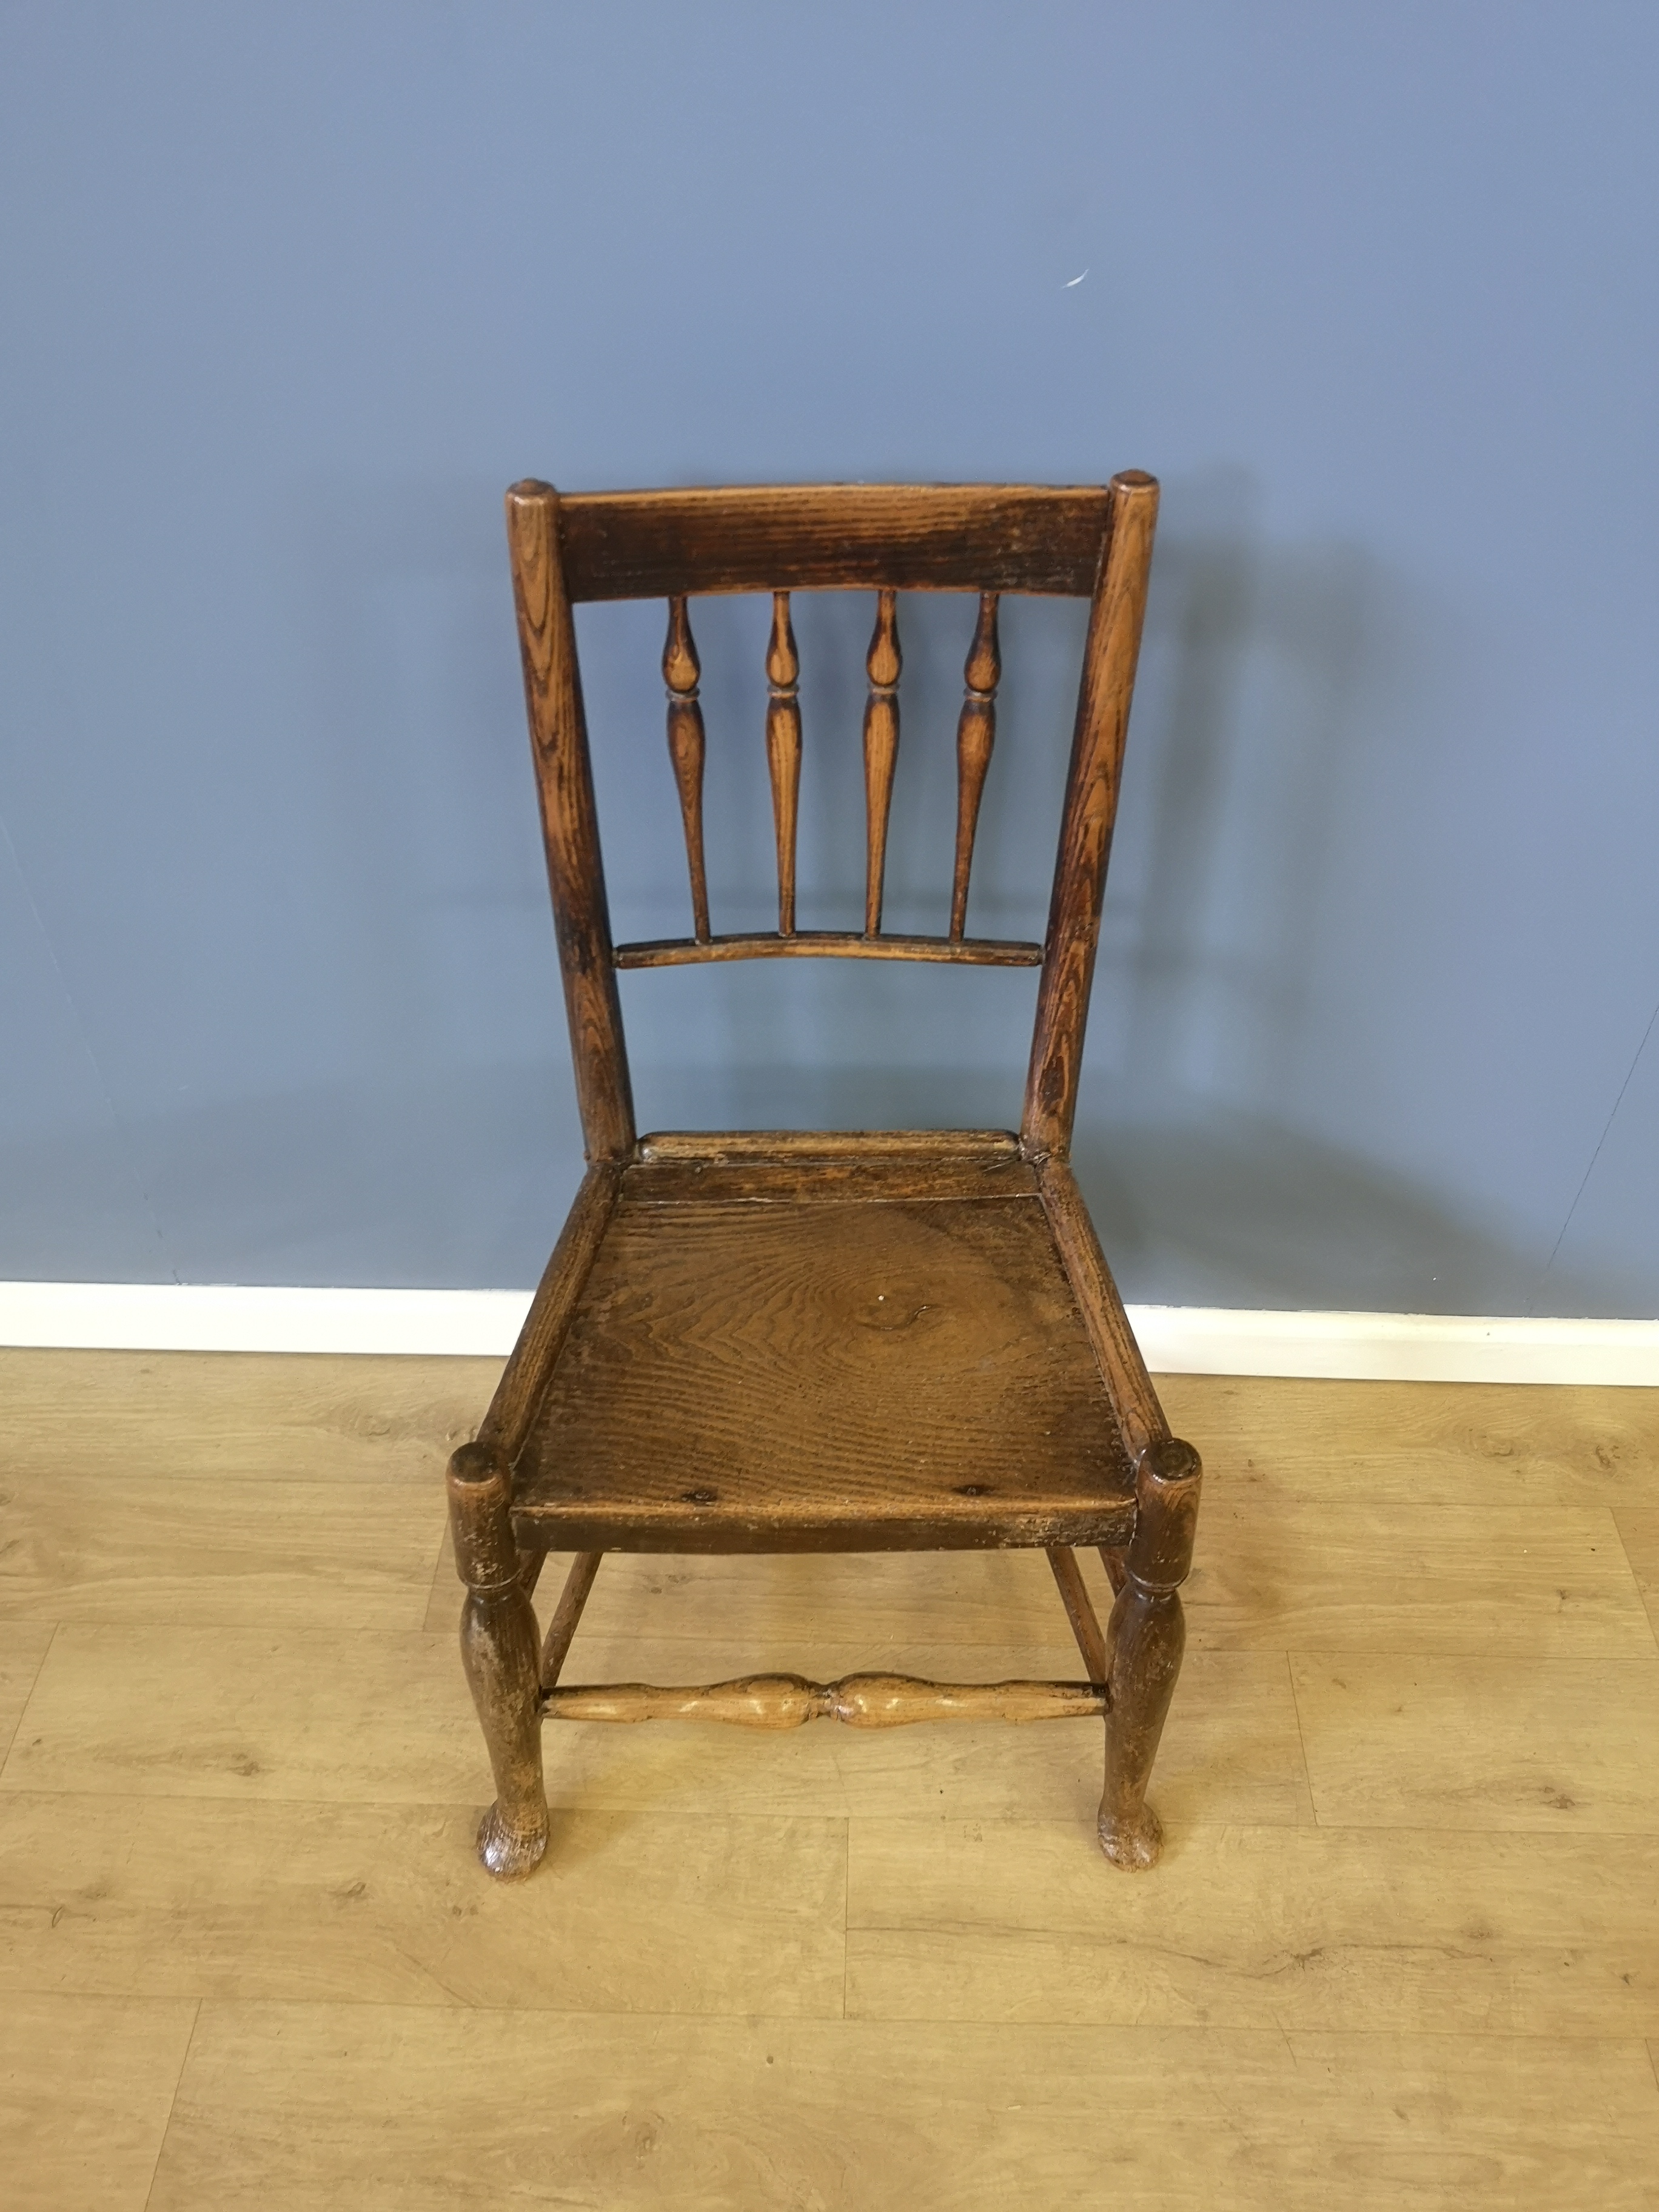 19th century ash railback chair - Image 2 of 4